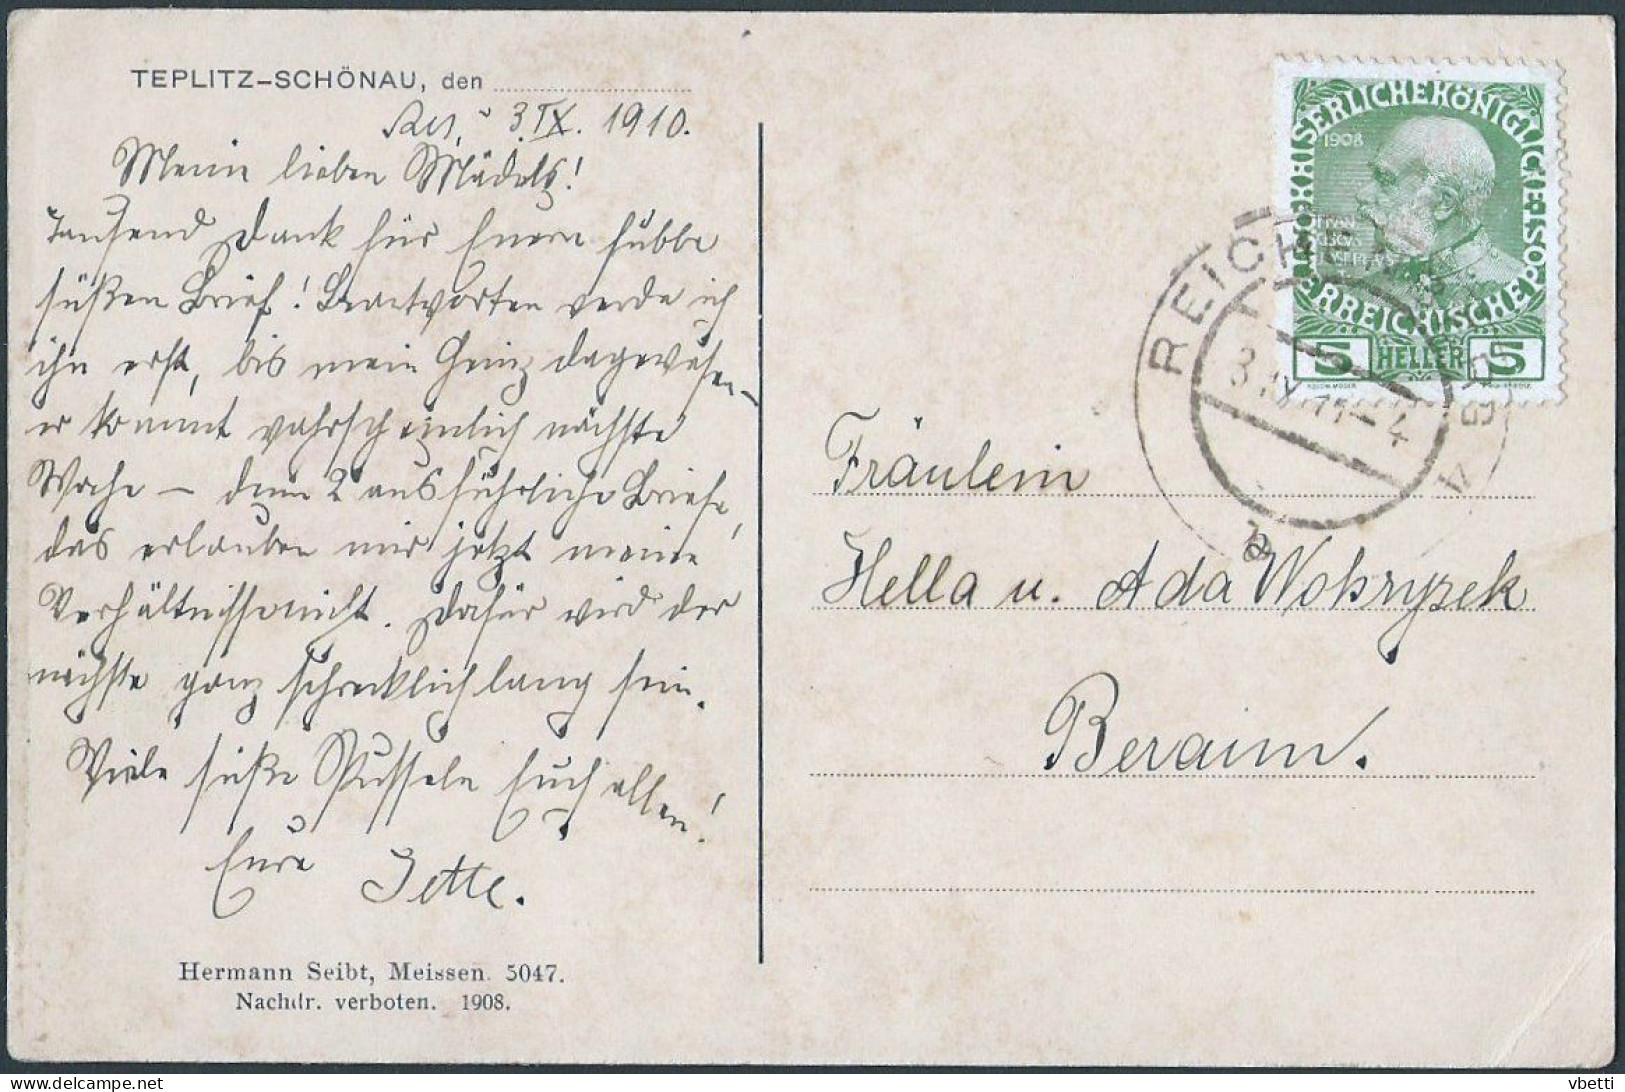 Czech Republic / Böhmen: Teplitz-Schönau (Teplice)   1910 - Czech Republic